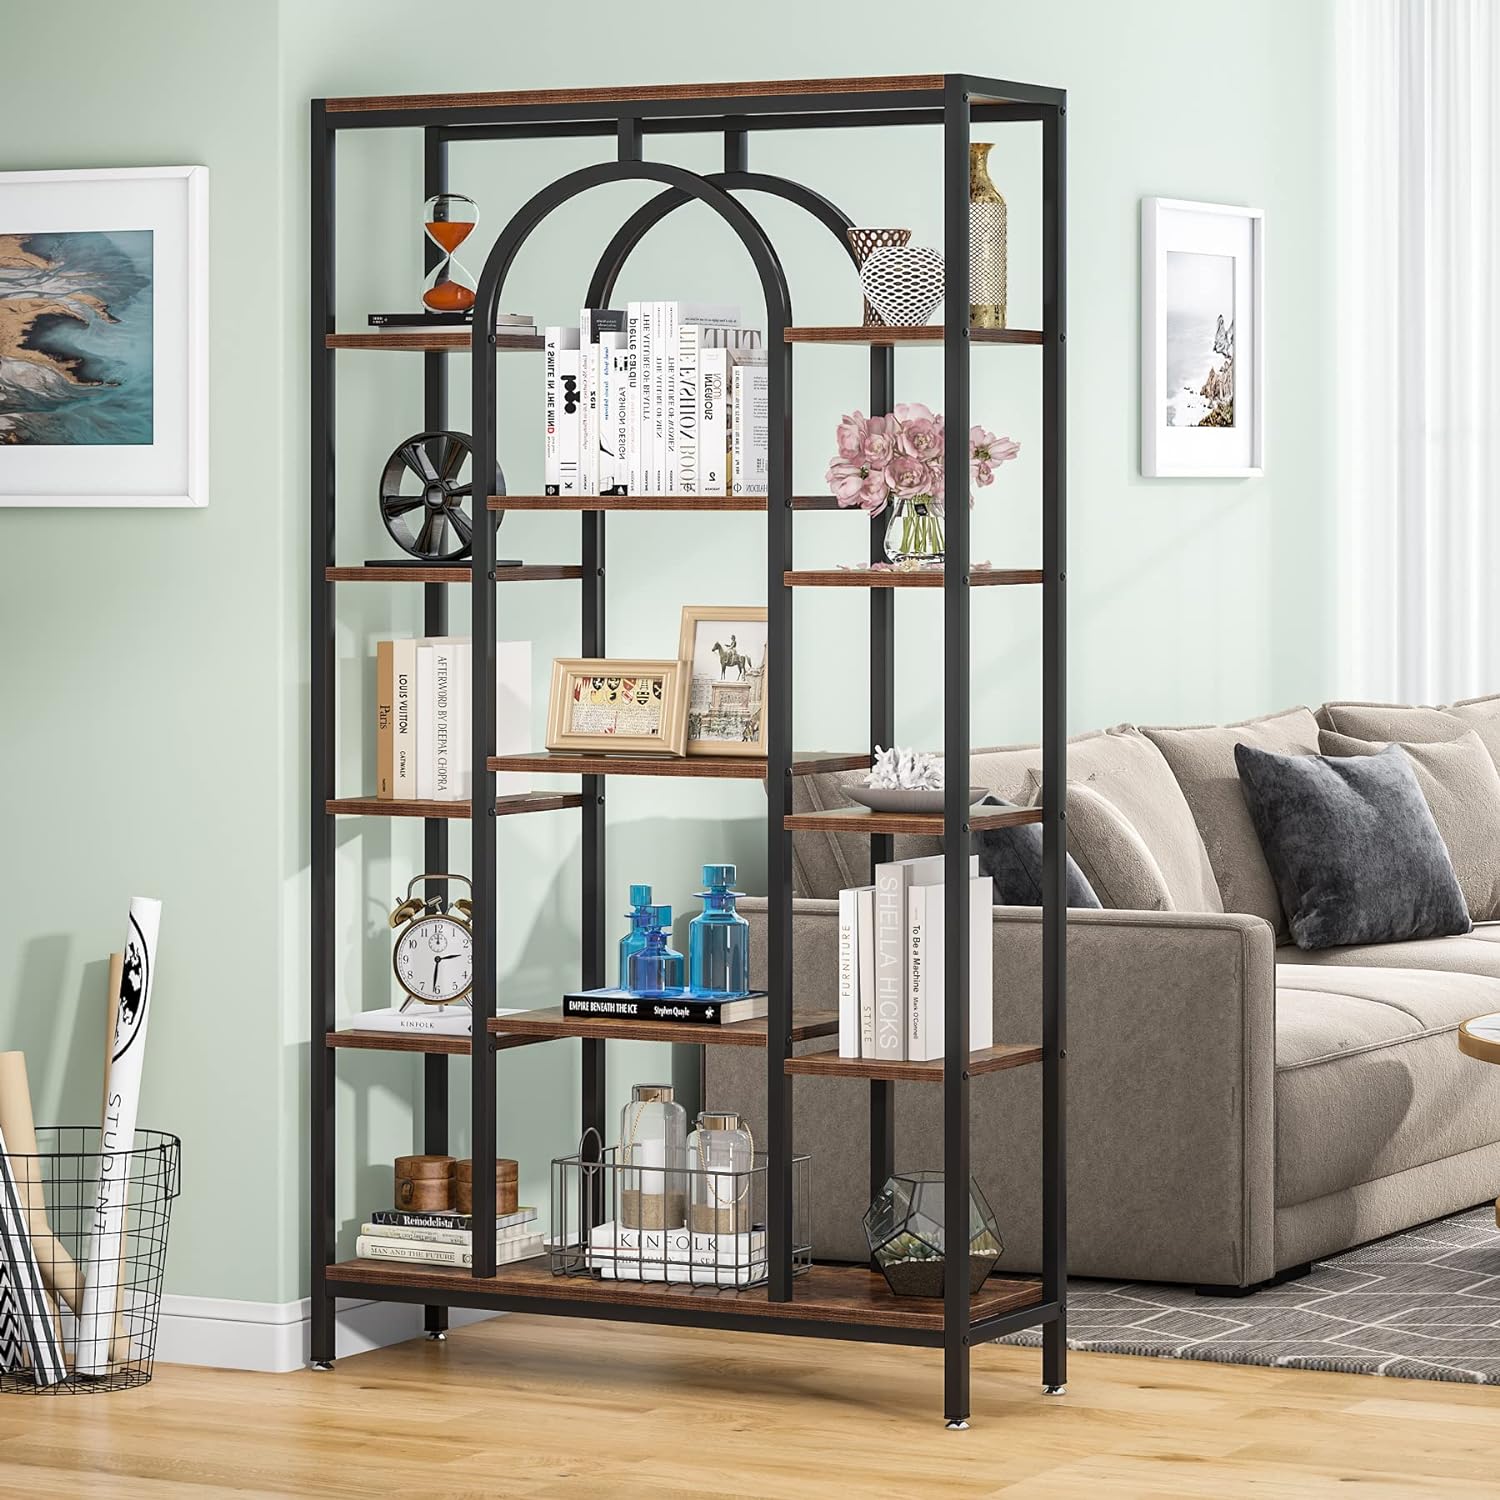 Tribesigns 5-Tier Bookshelf, Industrial Tall Bookcase Book Shelf Organizer Freestanding Open Display Shelves for Living Room